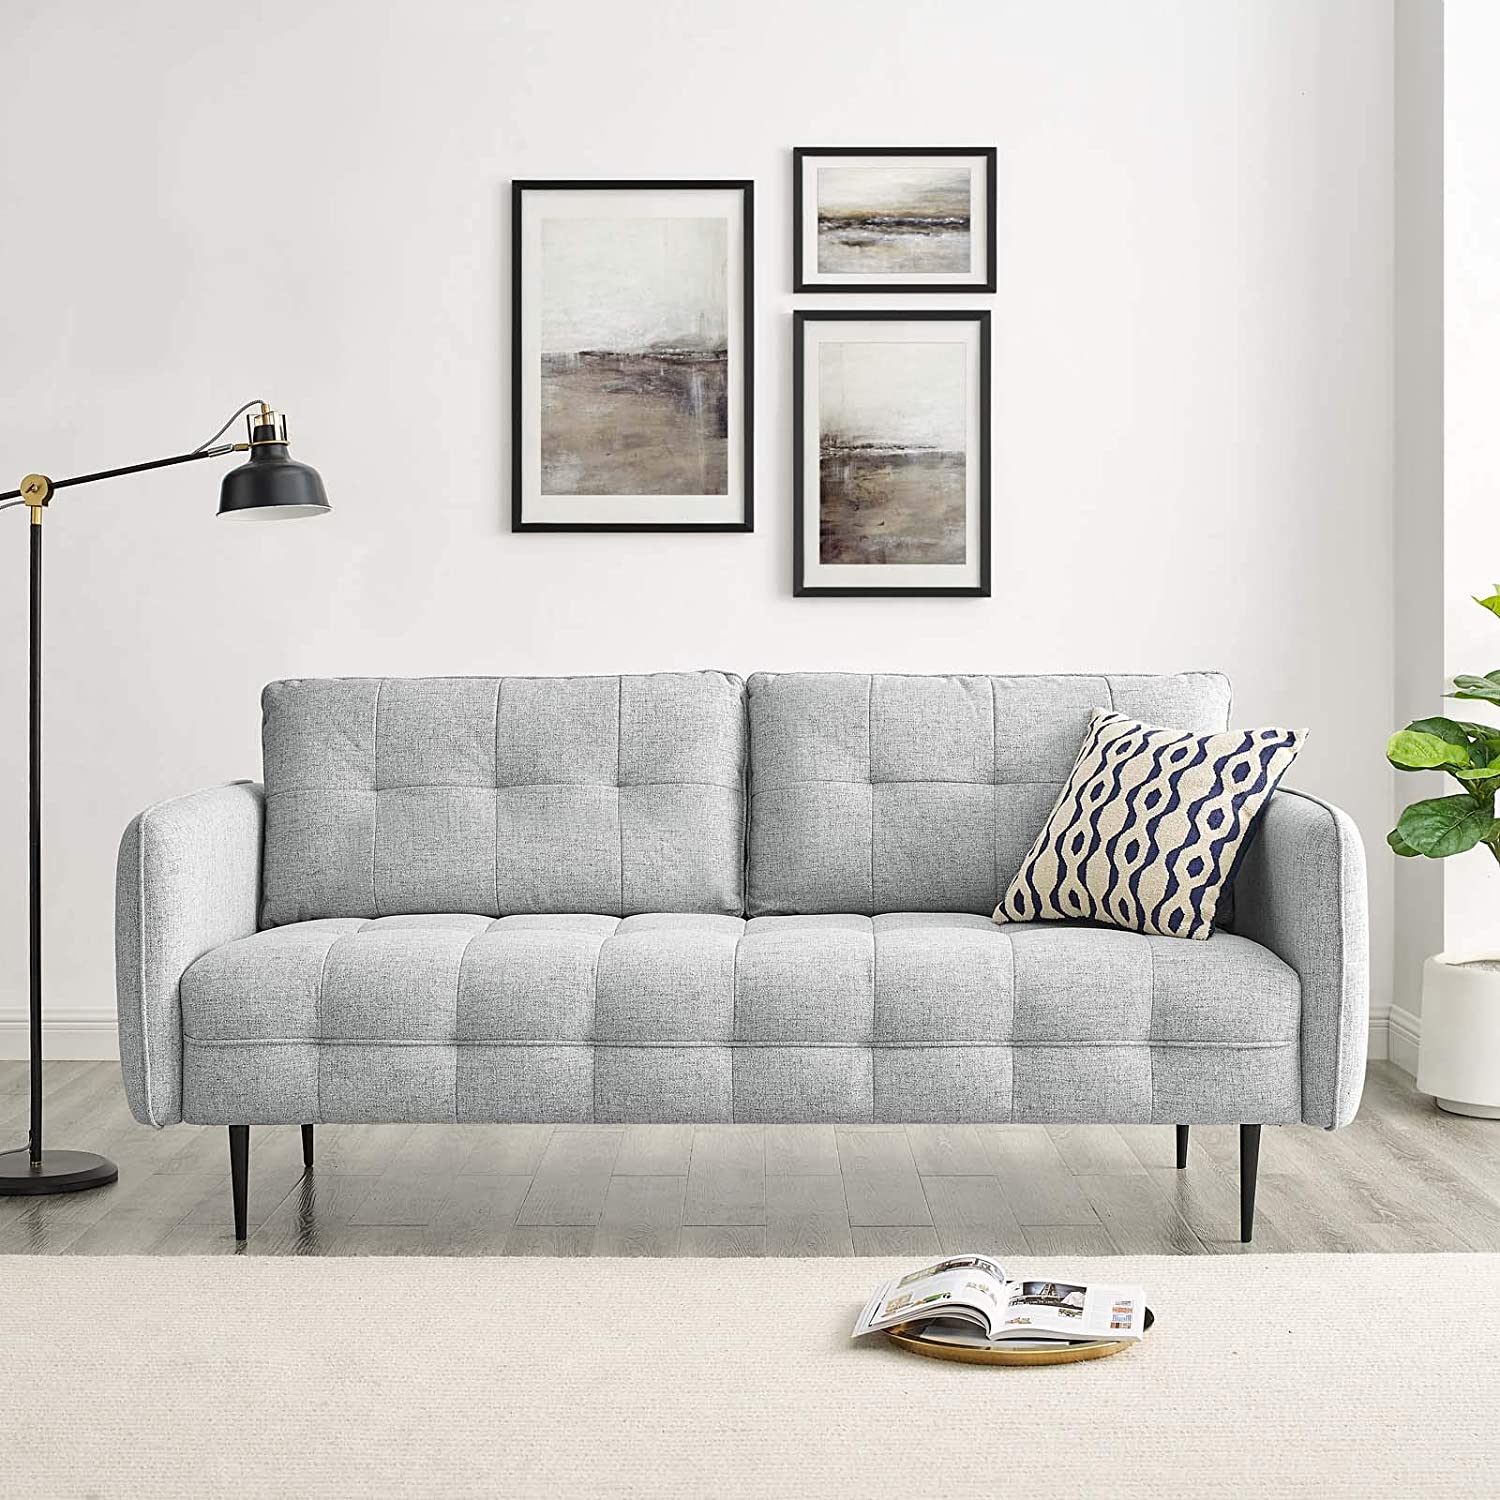 Simple Sofa Design For Small Living Room - BEST HOME DESIGN IDEAS